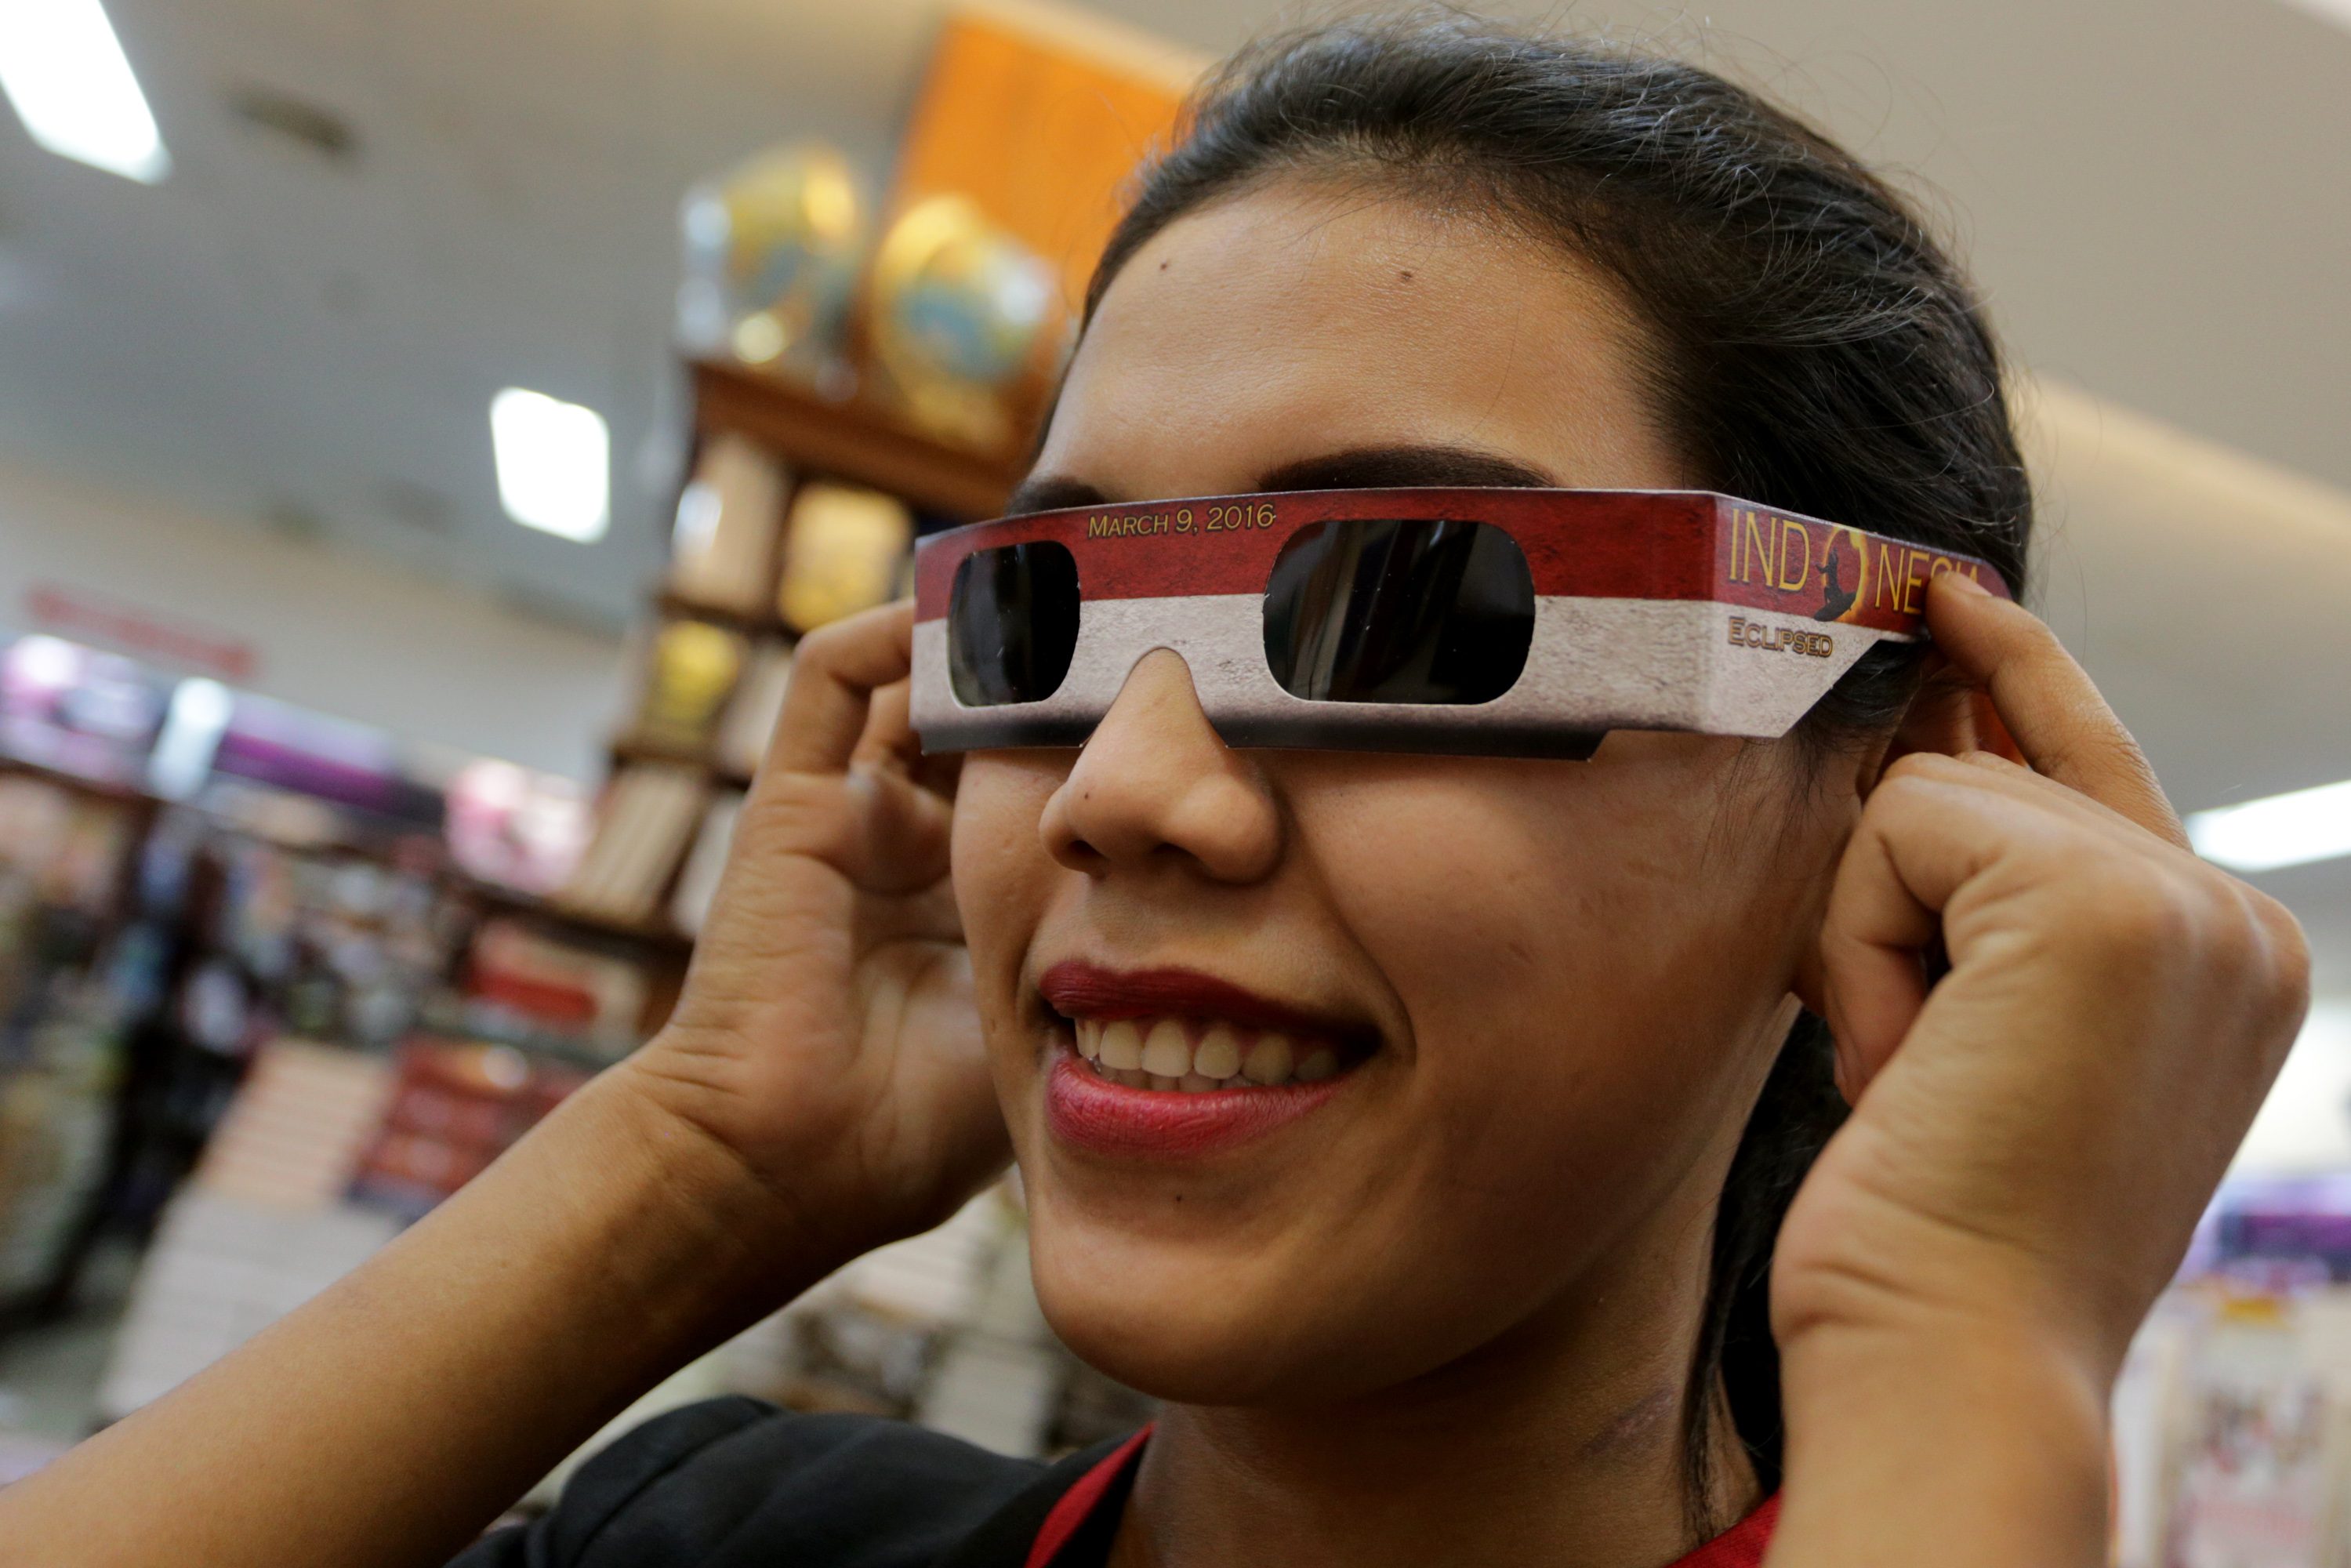 Warga mencoba kacamata gerhana matahari di salah satu toko buku di Palembang, Sumatra Selatan, Sabtu, 5 Maret. Foto oleh Nova Wahyudi/ANTARA 